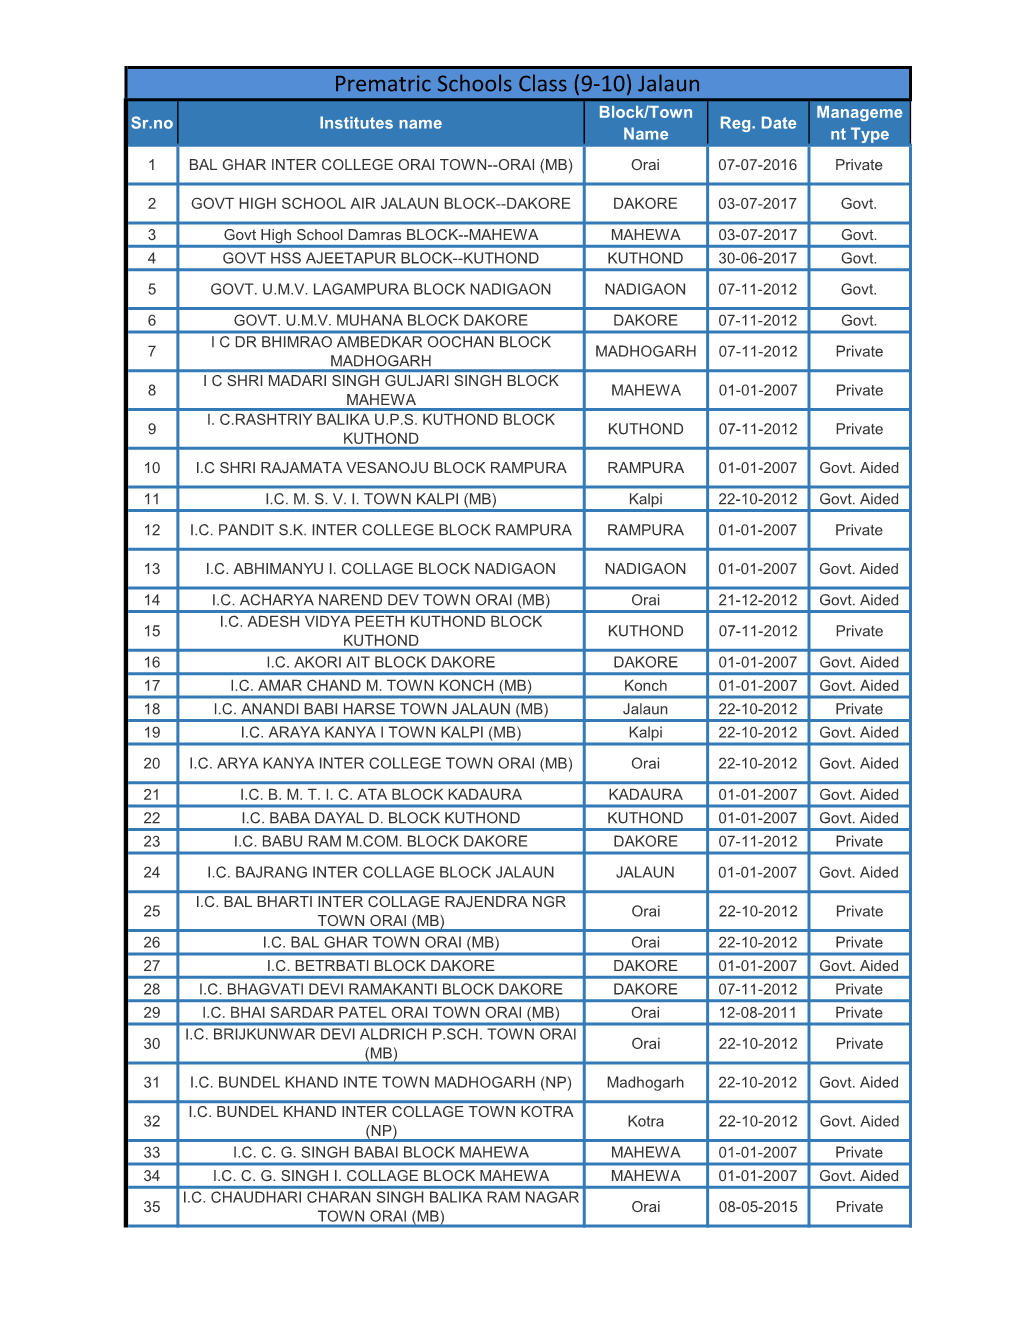 Prematric Schools Class (9-10) Jalaun Block/Town Manageme Sr.No Institutes Name Reg